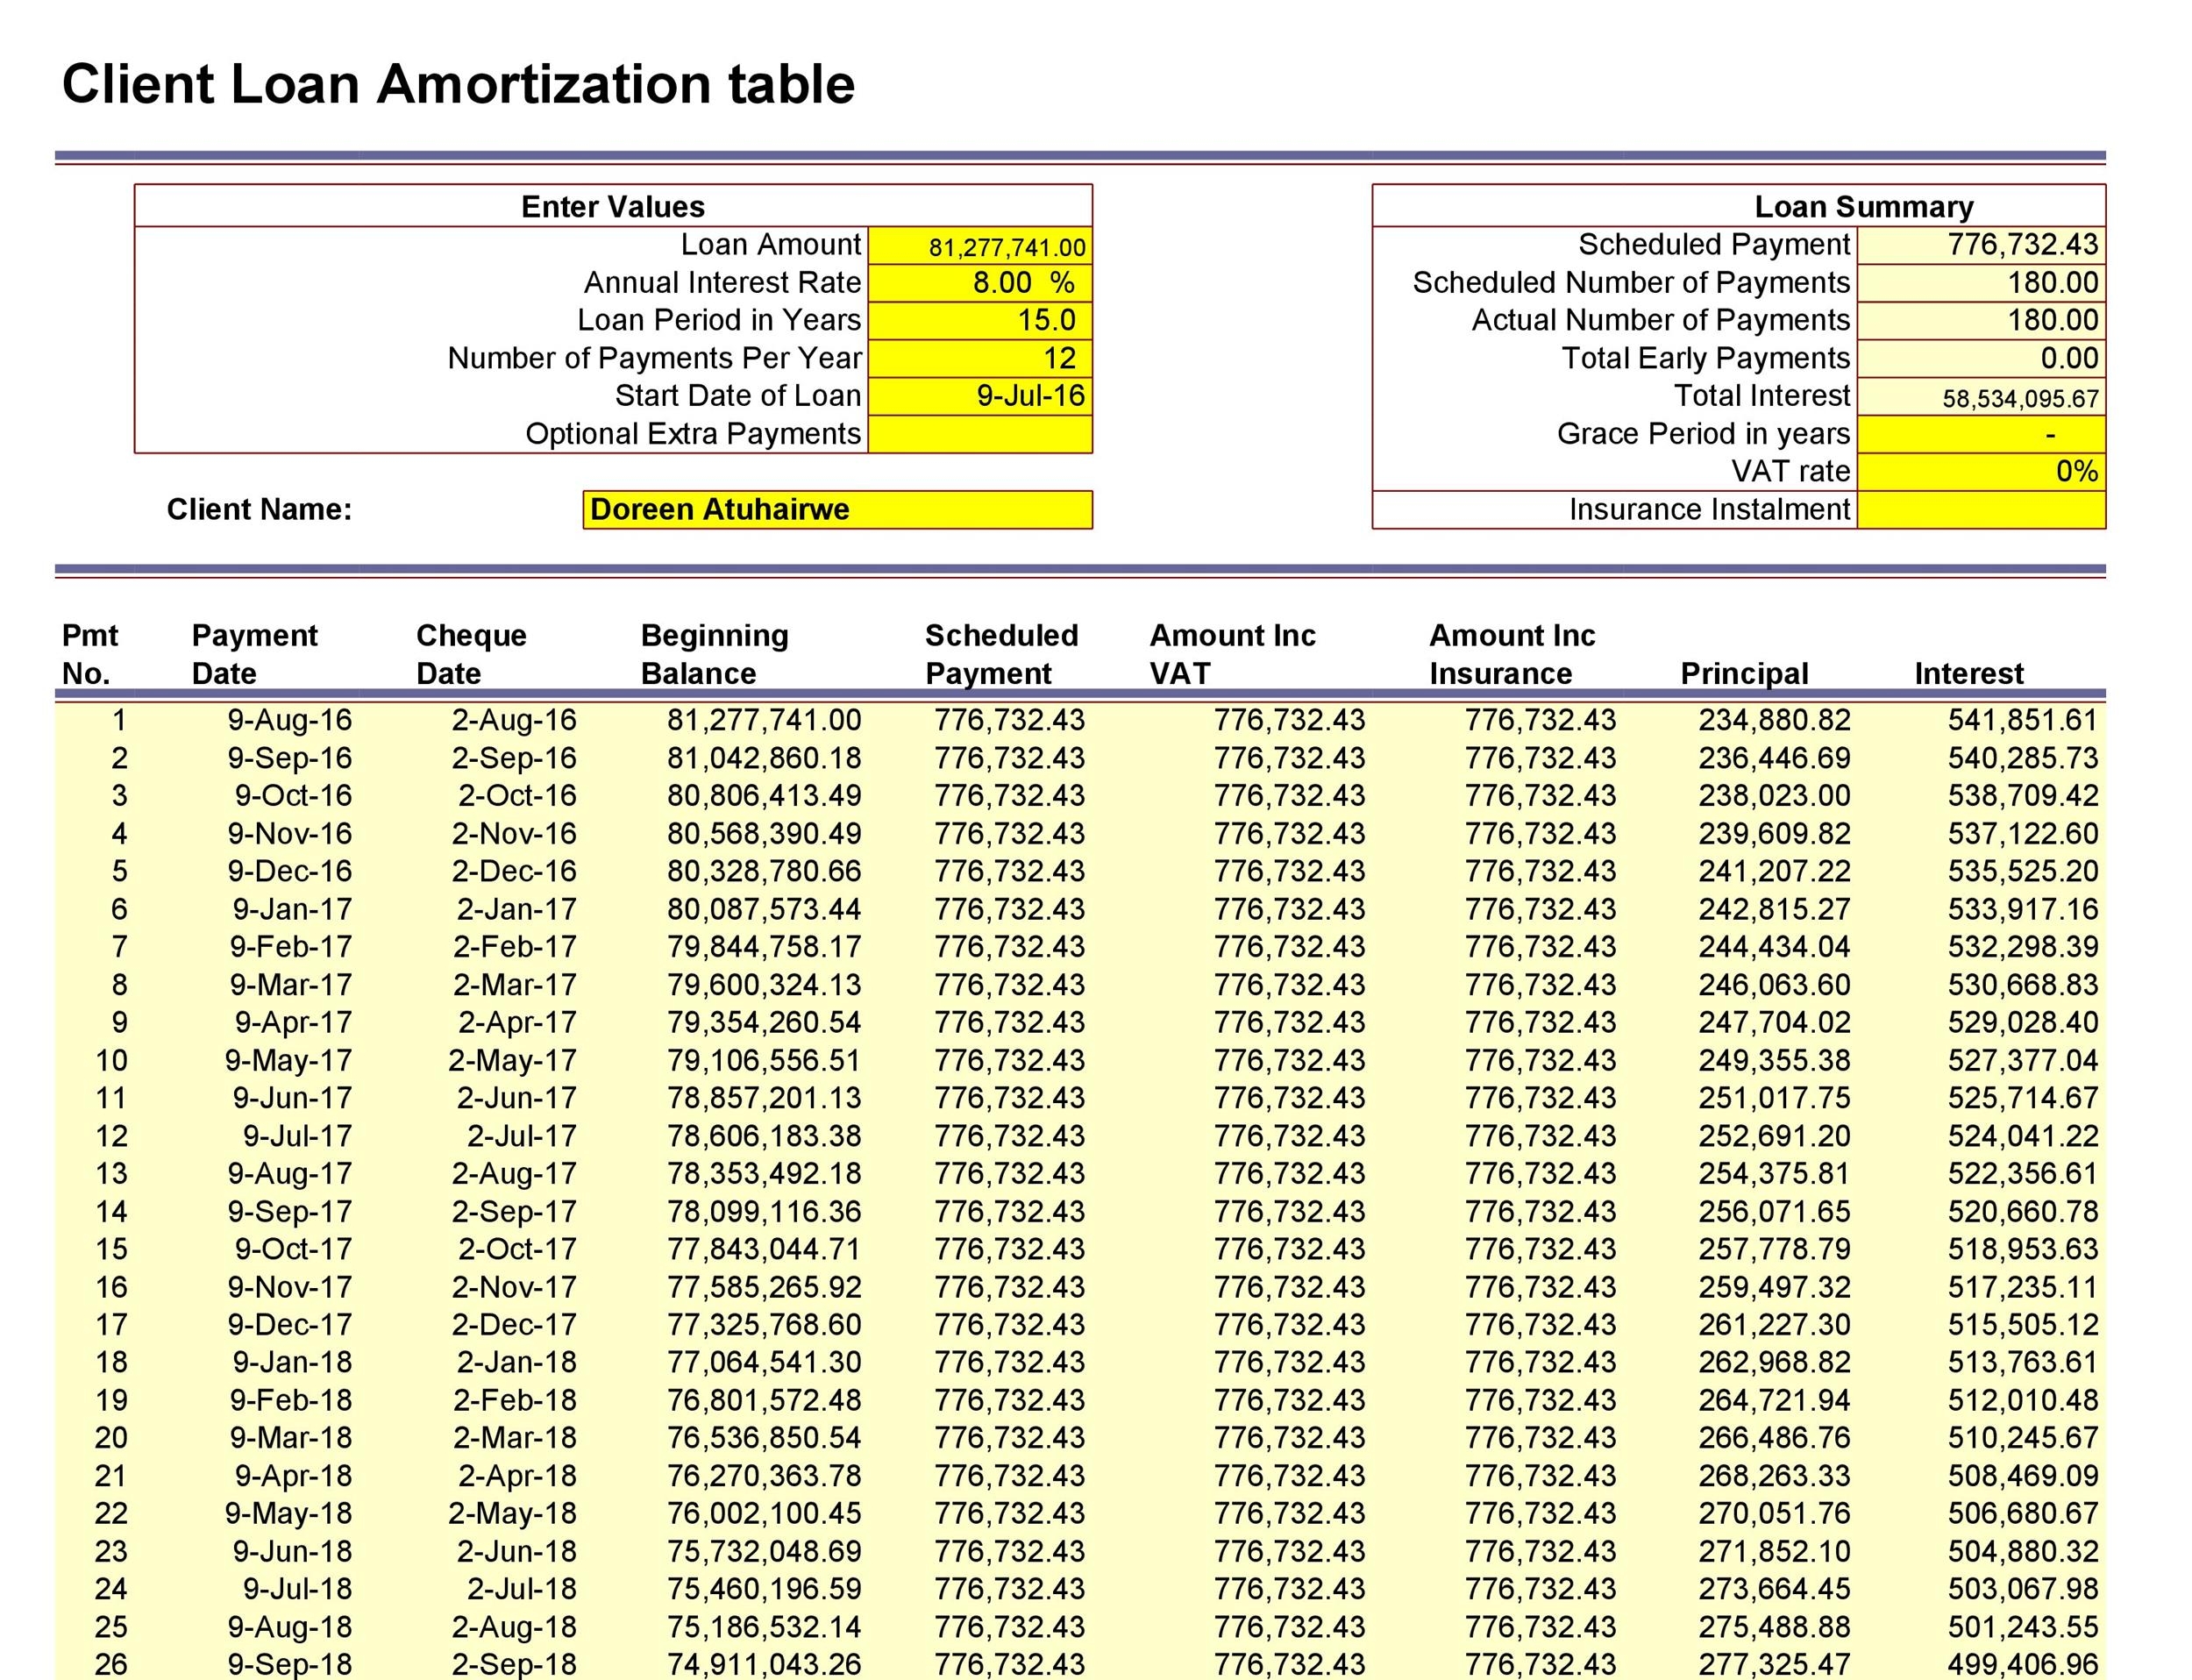 Loan Amortization Schedule Excel 30+ Free Example RedlineSP